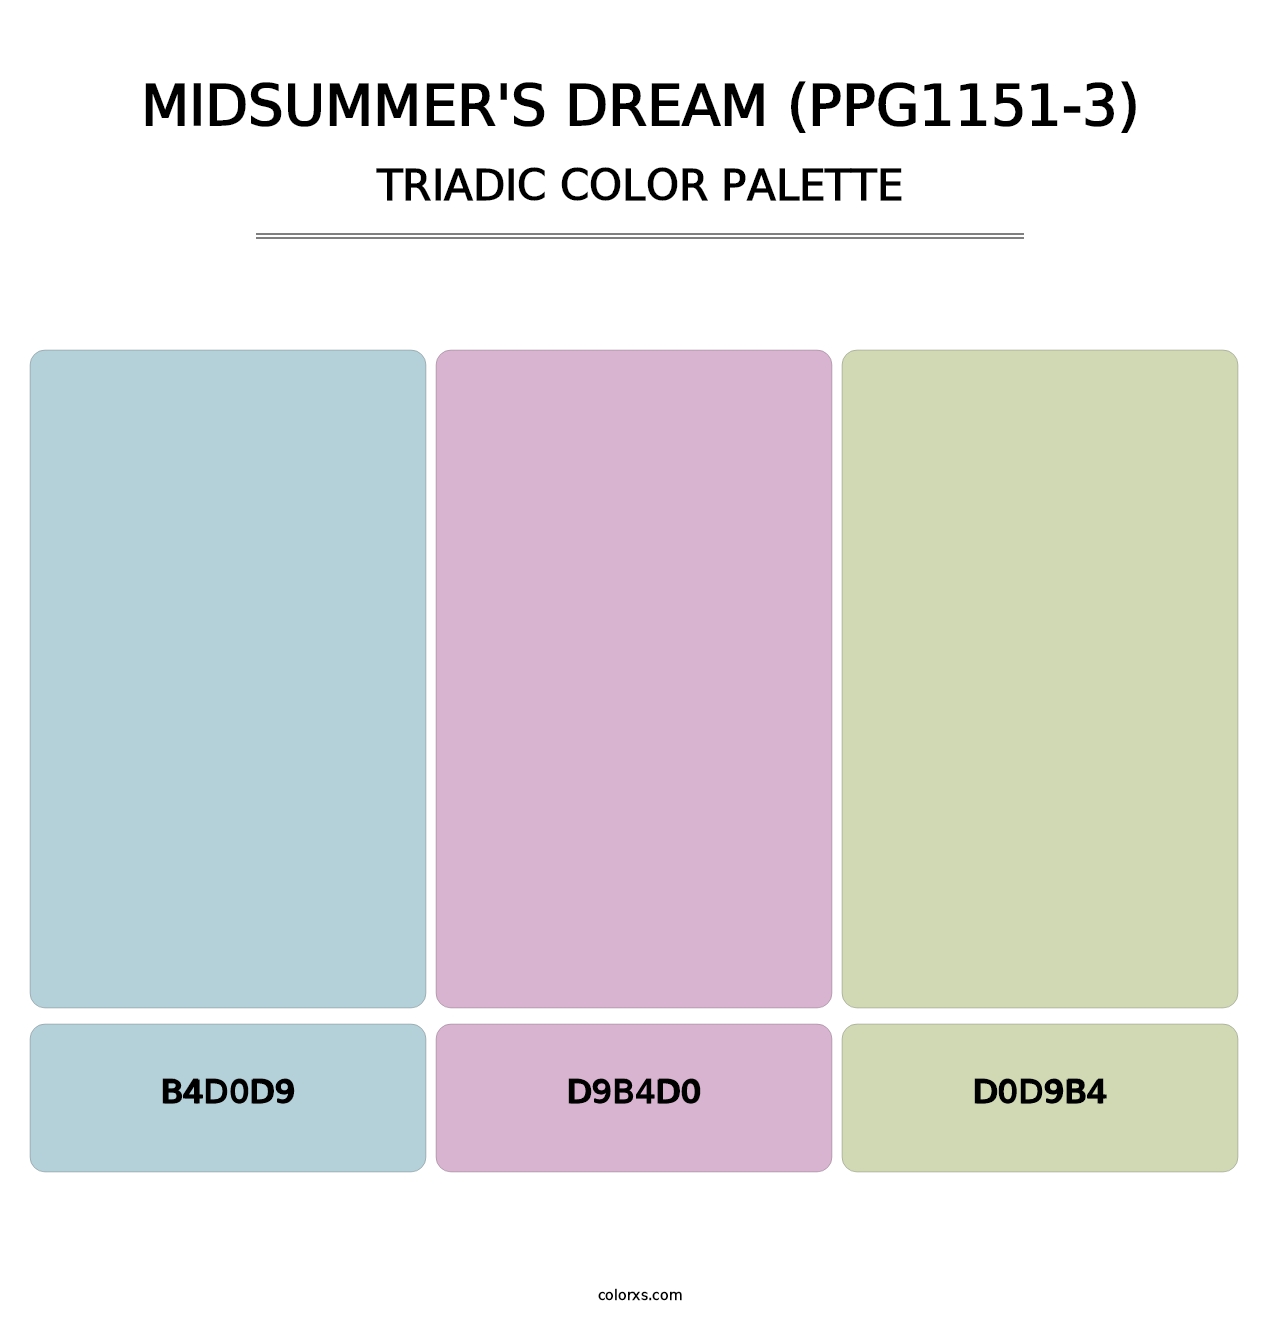 Midsummer's Dream (PPG1151-3) - Triadic Color Palette